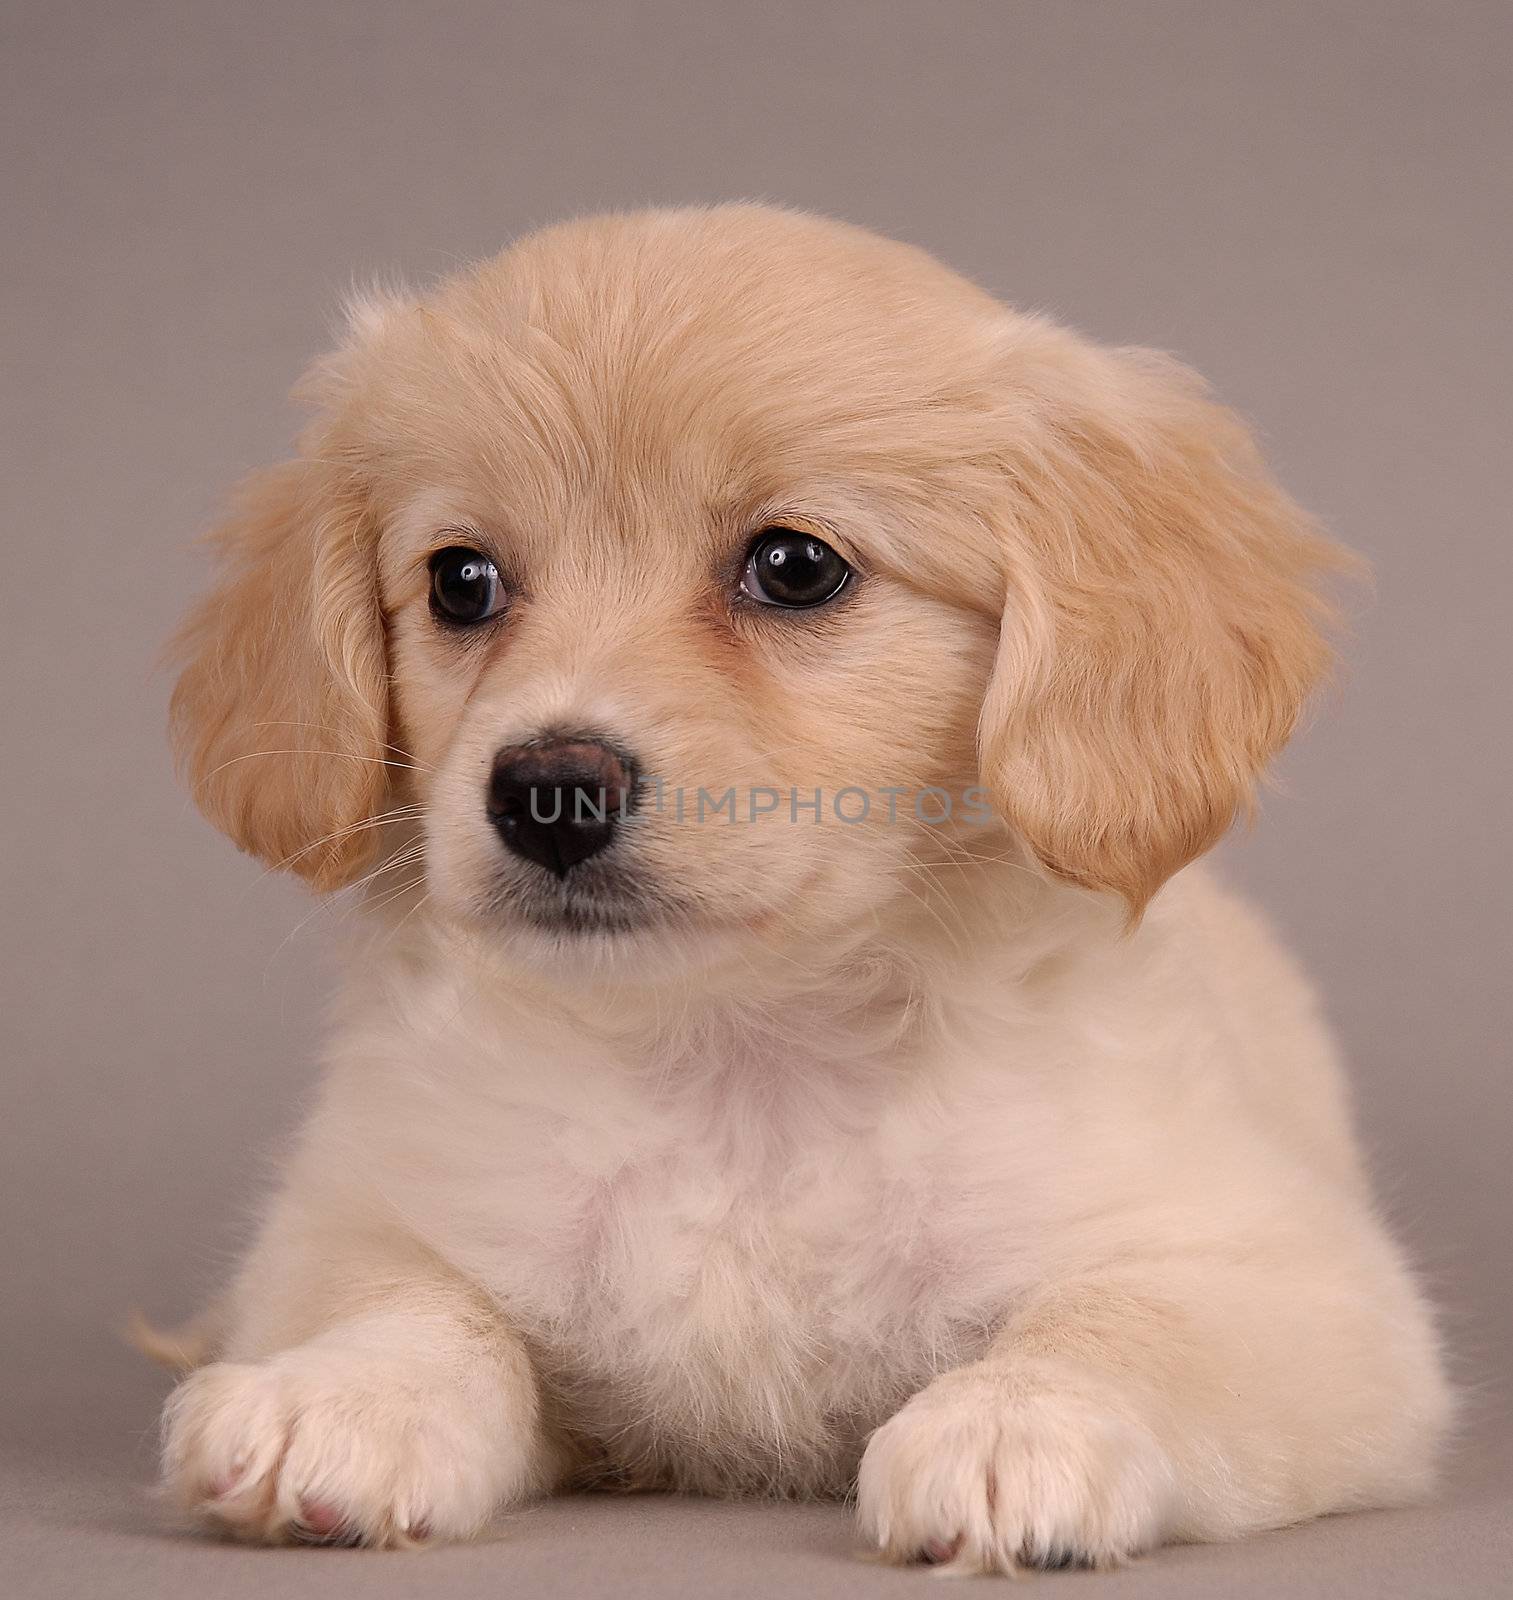 Beautiful young puppy portrait photograph taken in studio